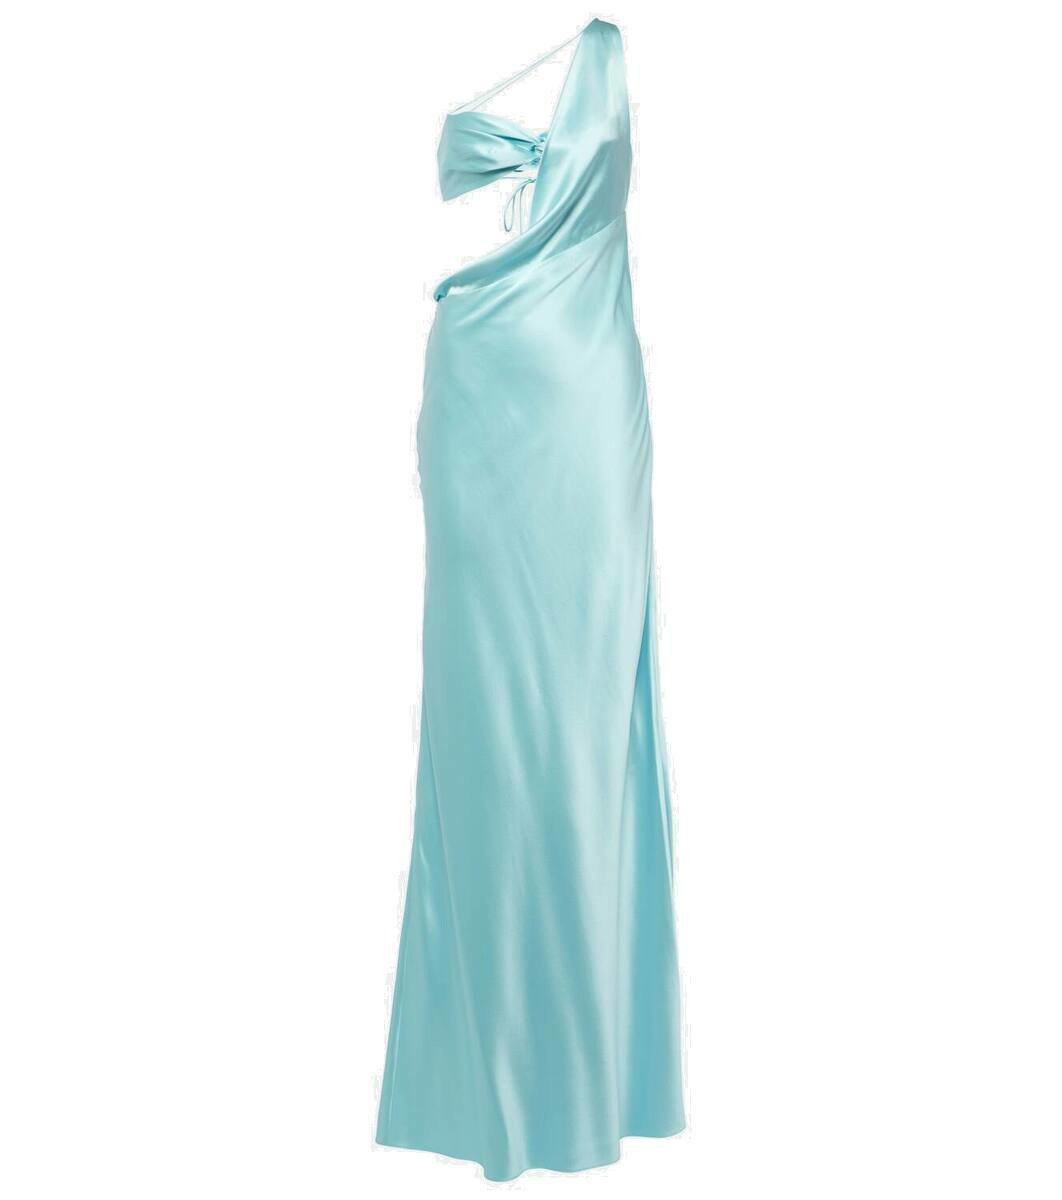 One-shoulder silk velvet gown in brown - The Sei